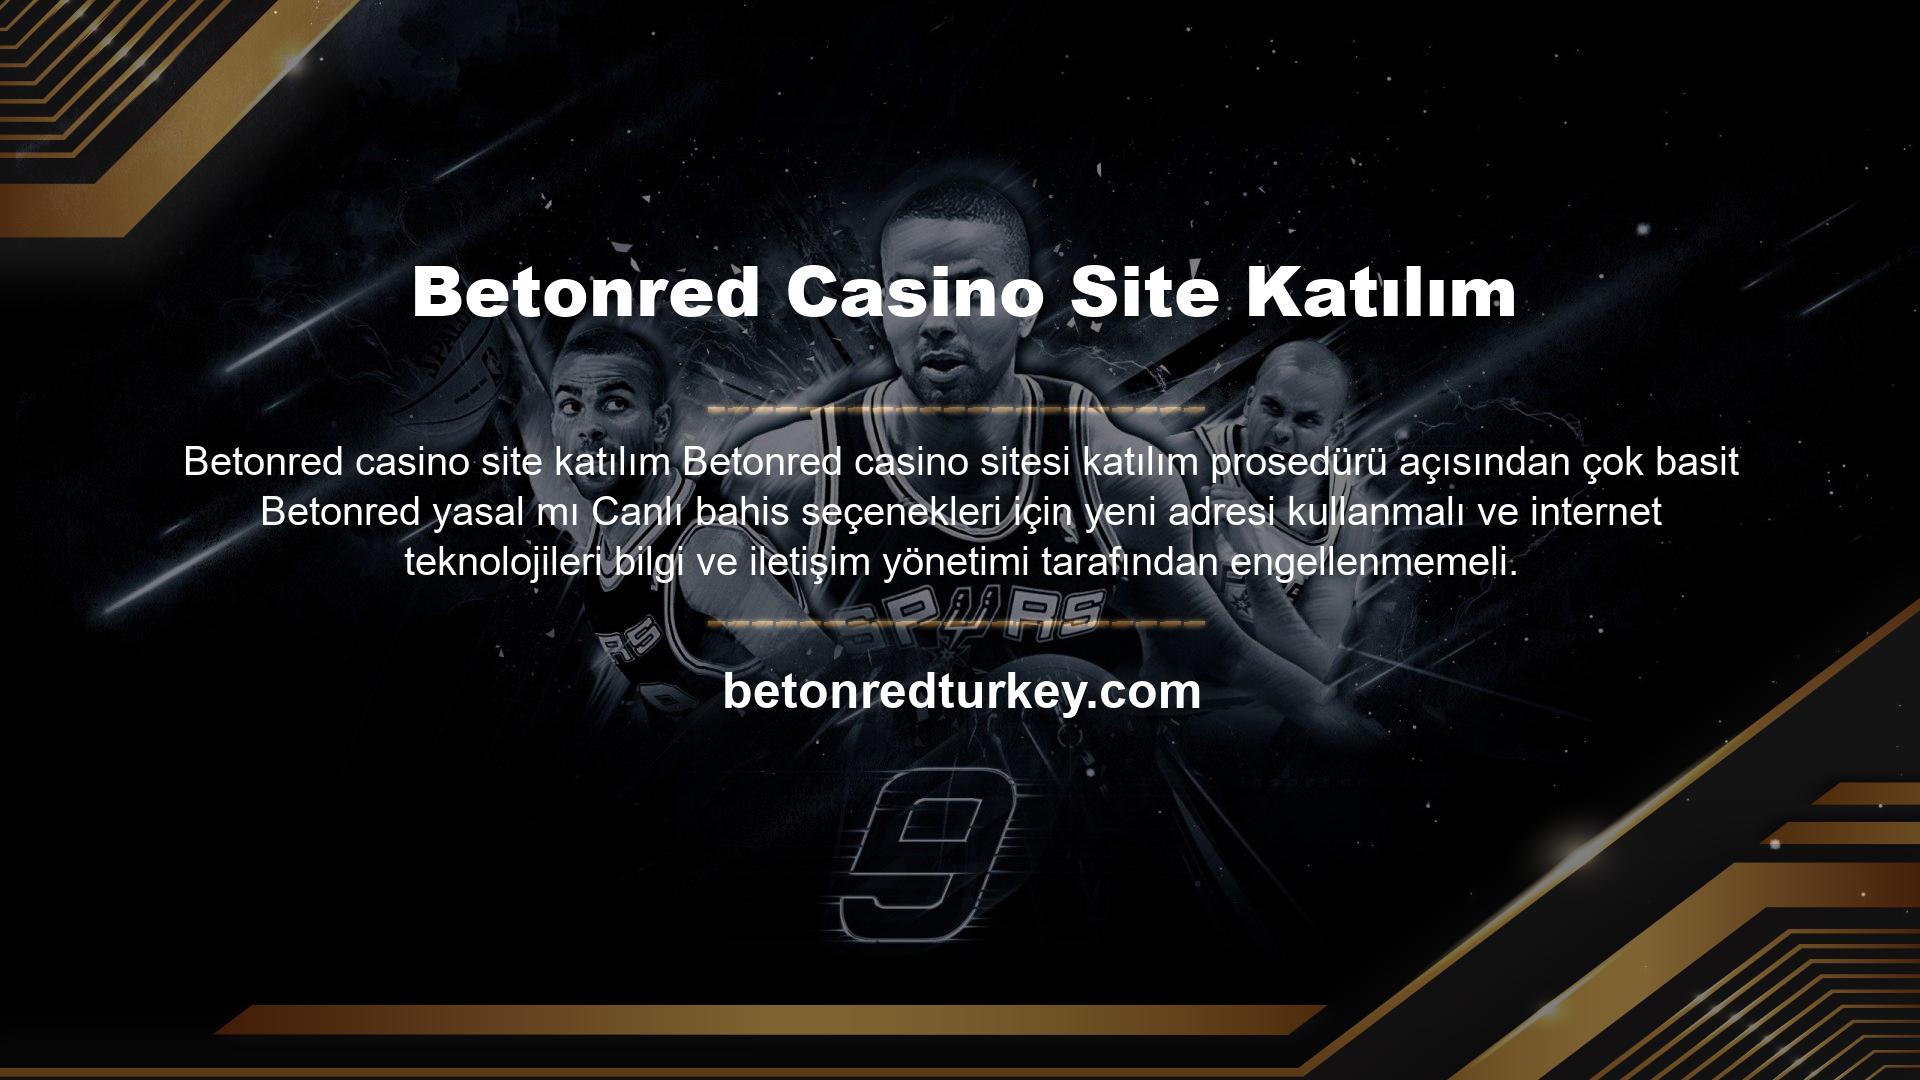 Betonred Casino Site Katılım